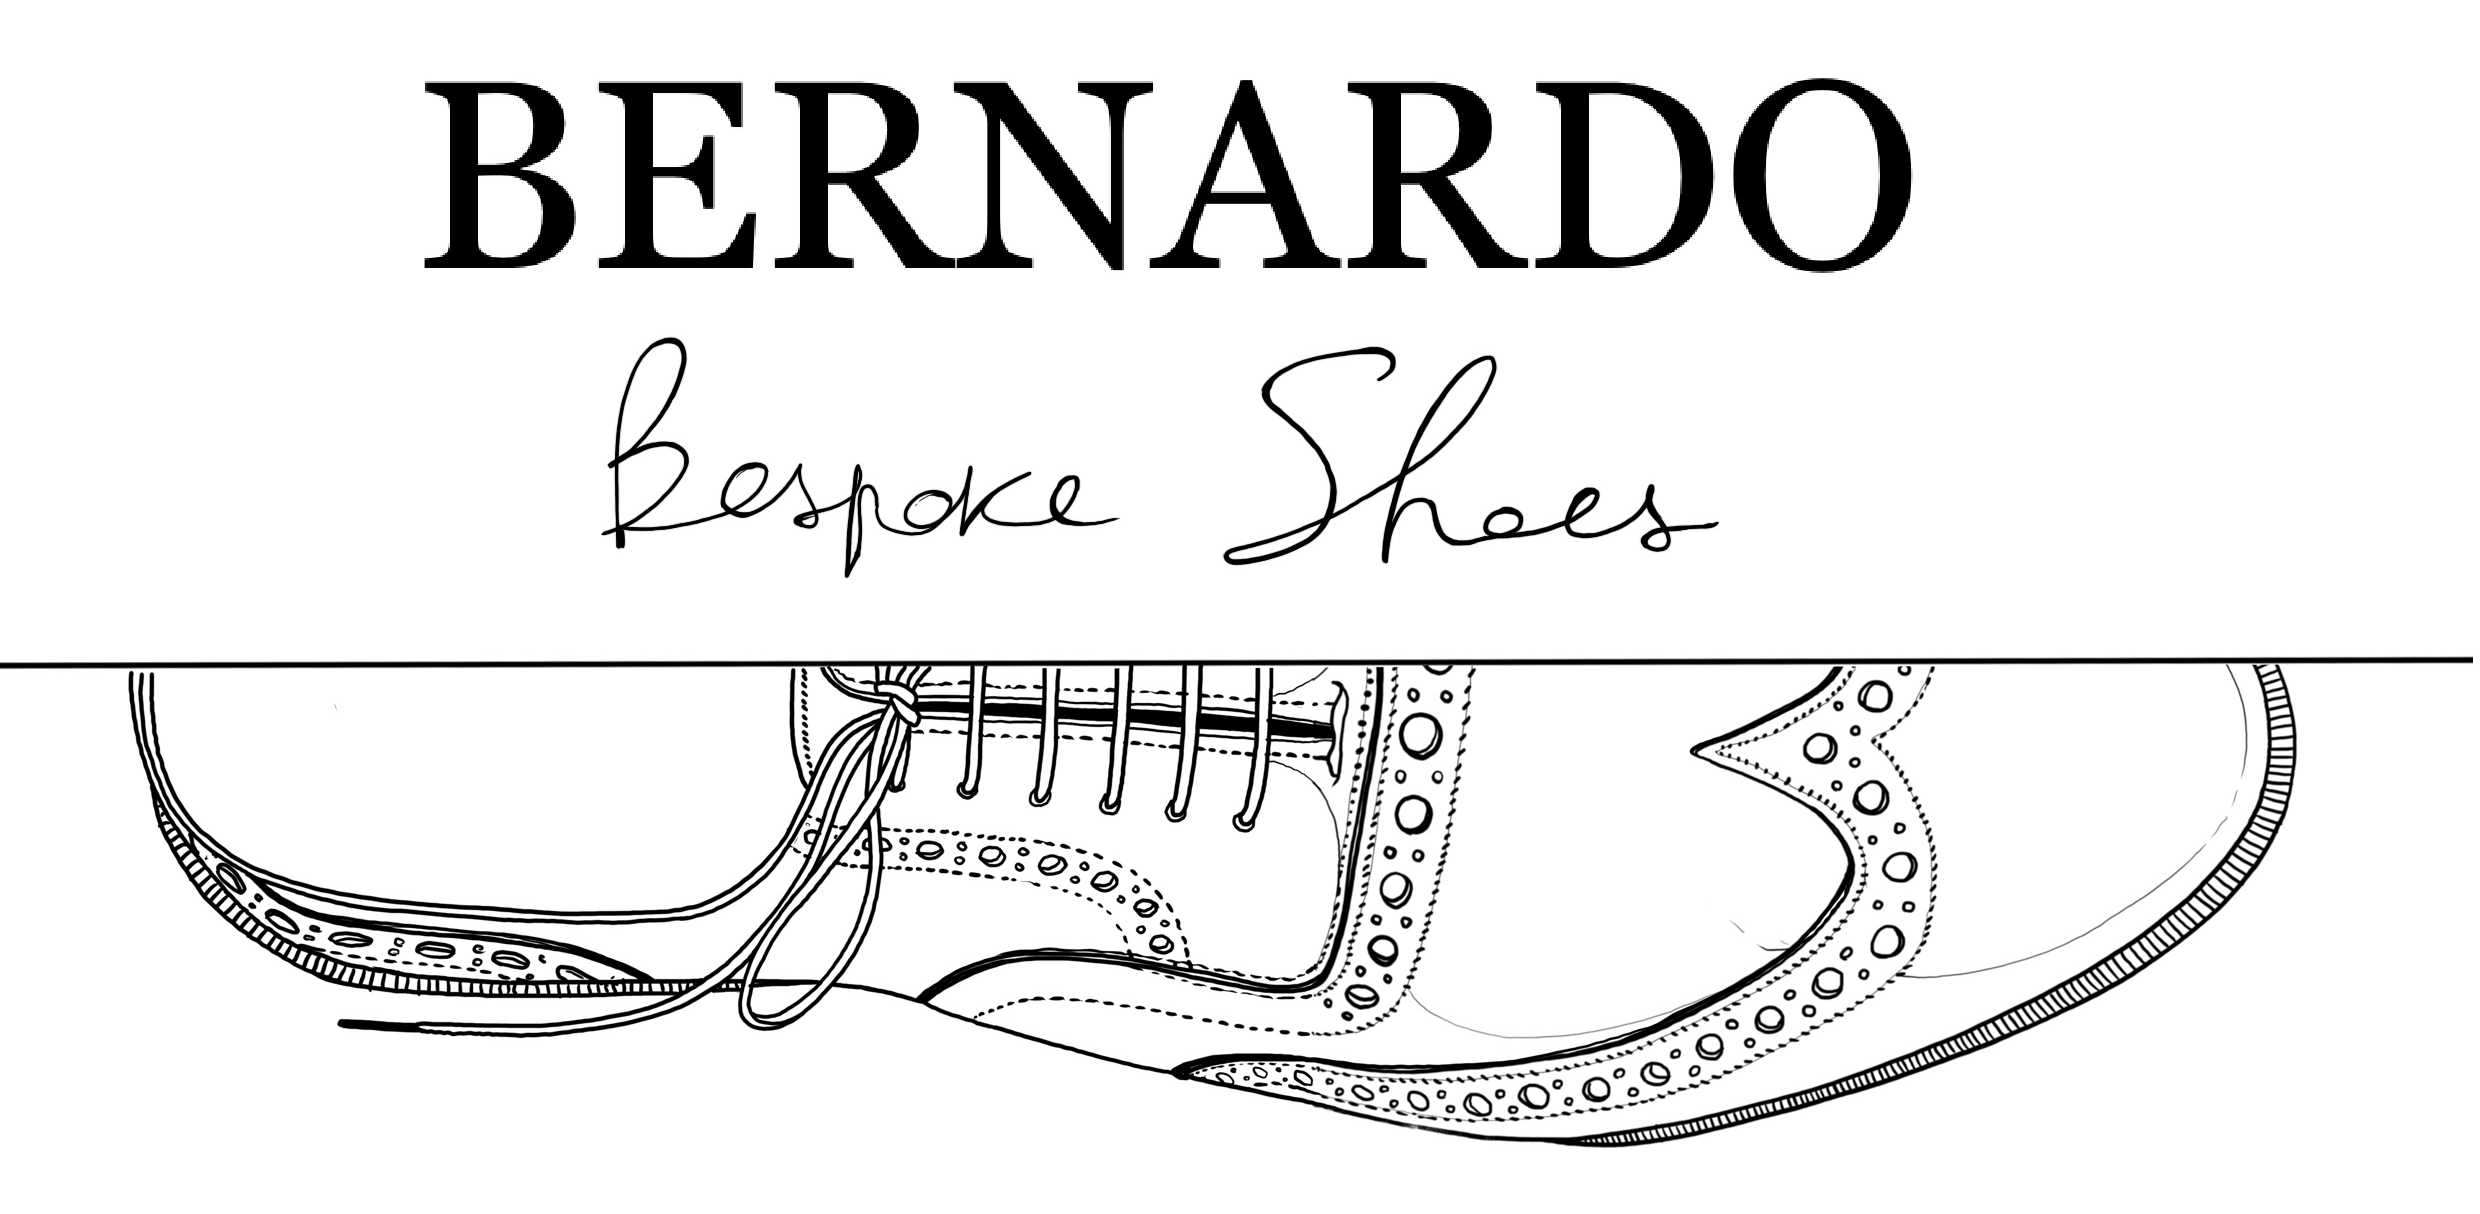 Bernardo Bespoke Shoes